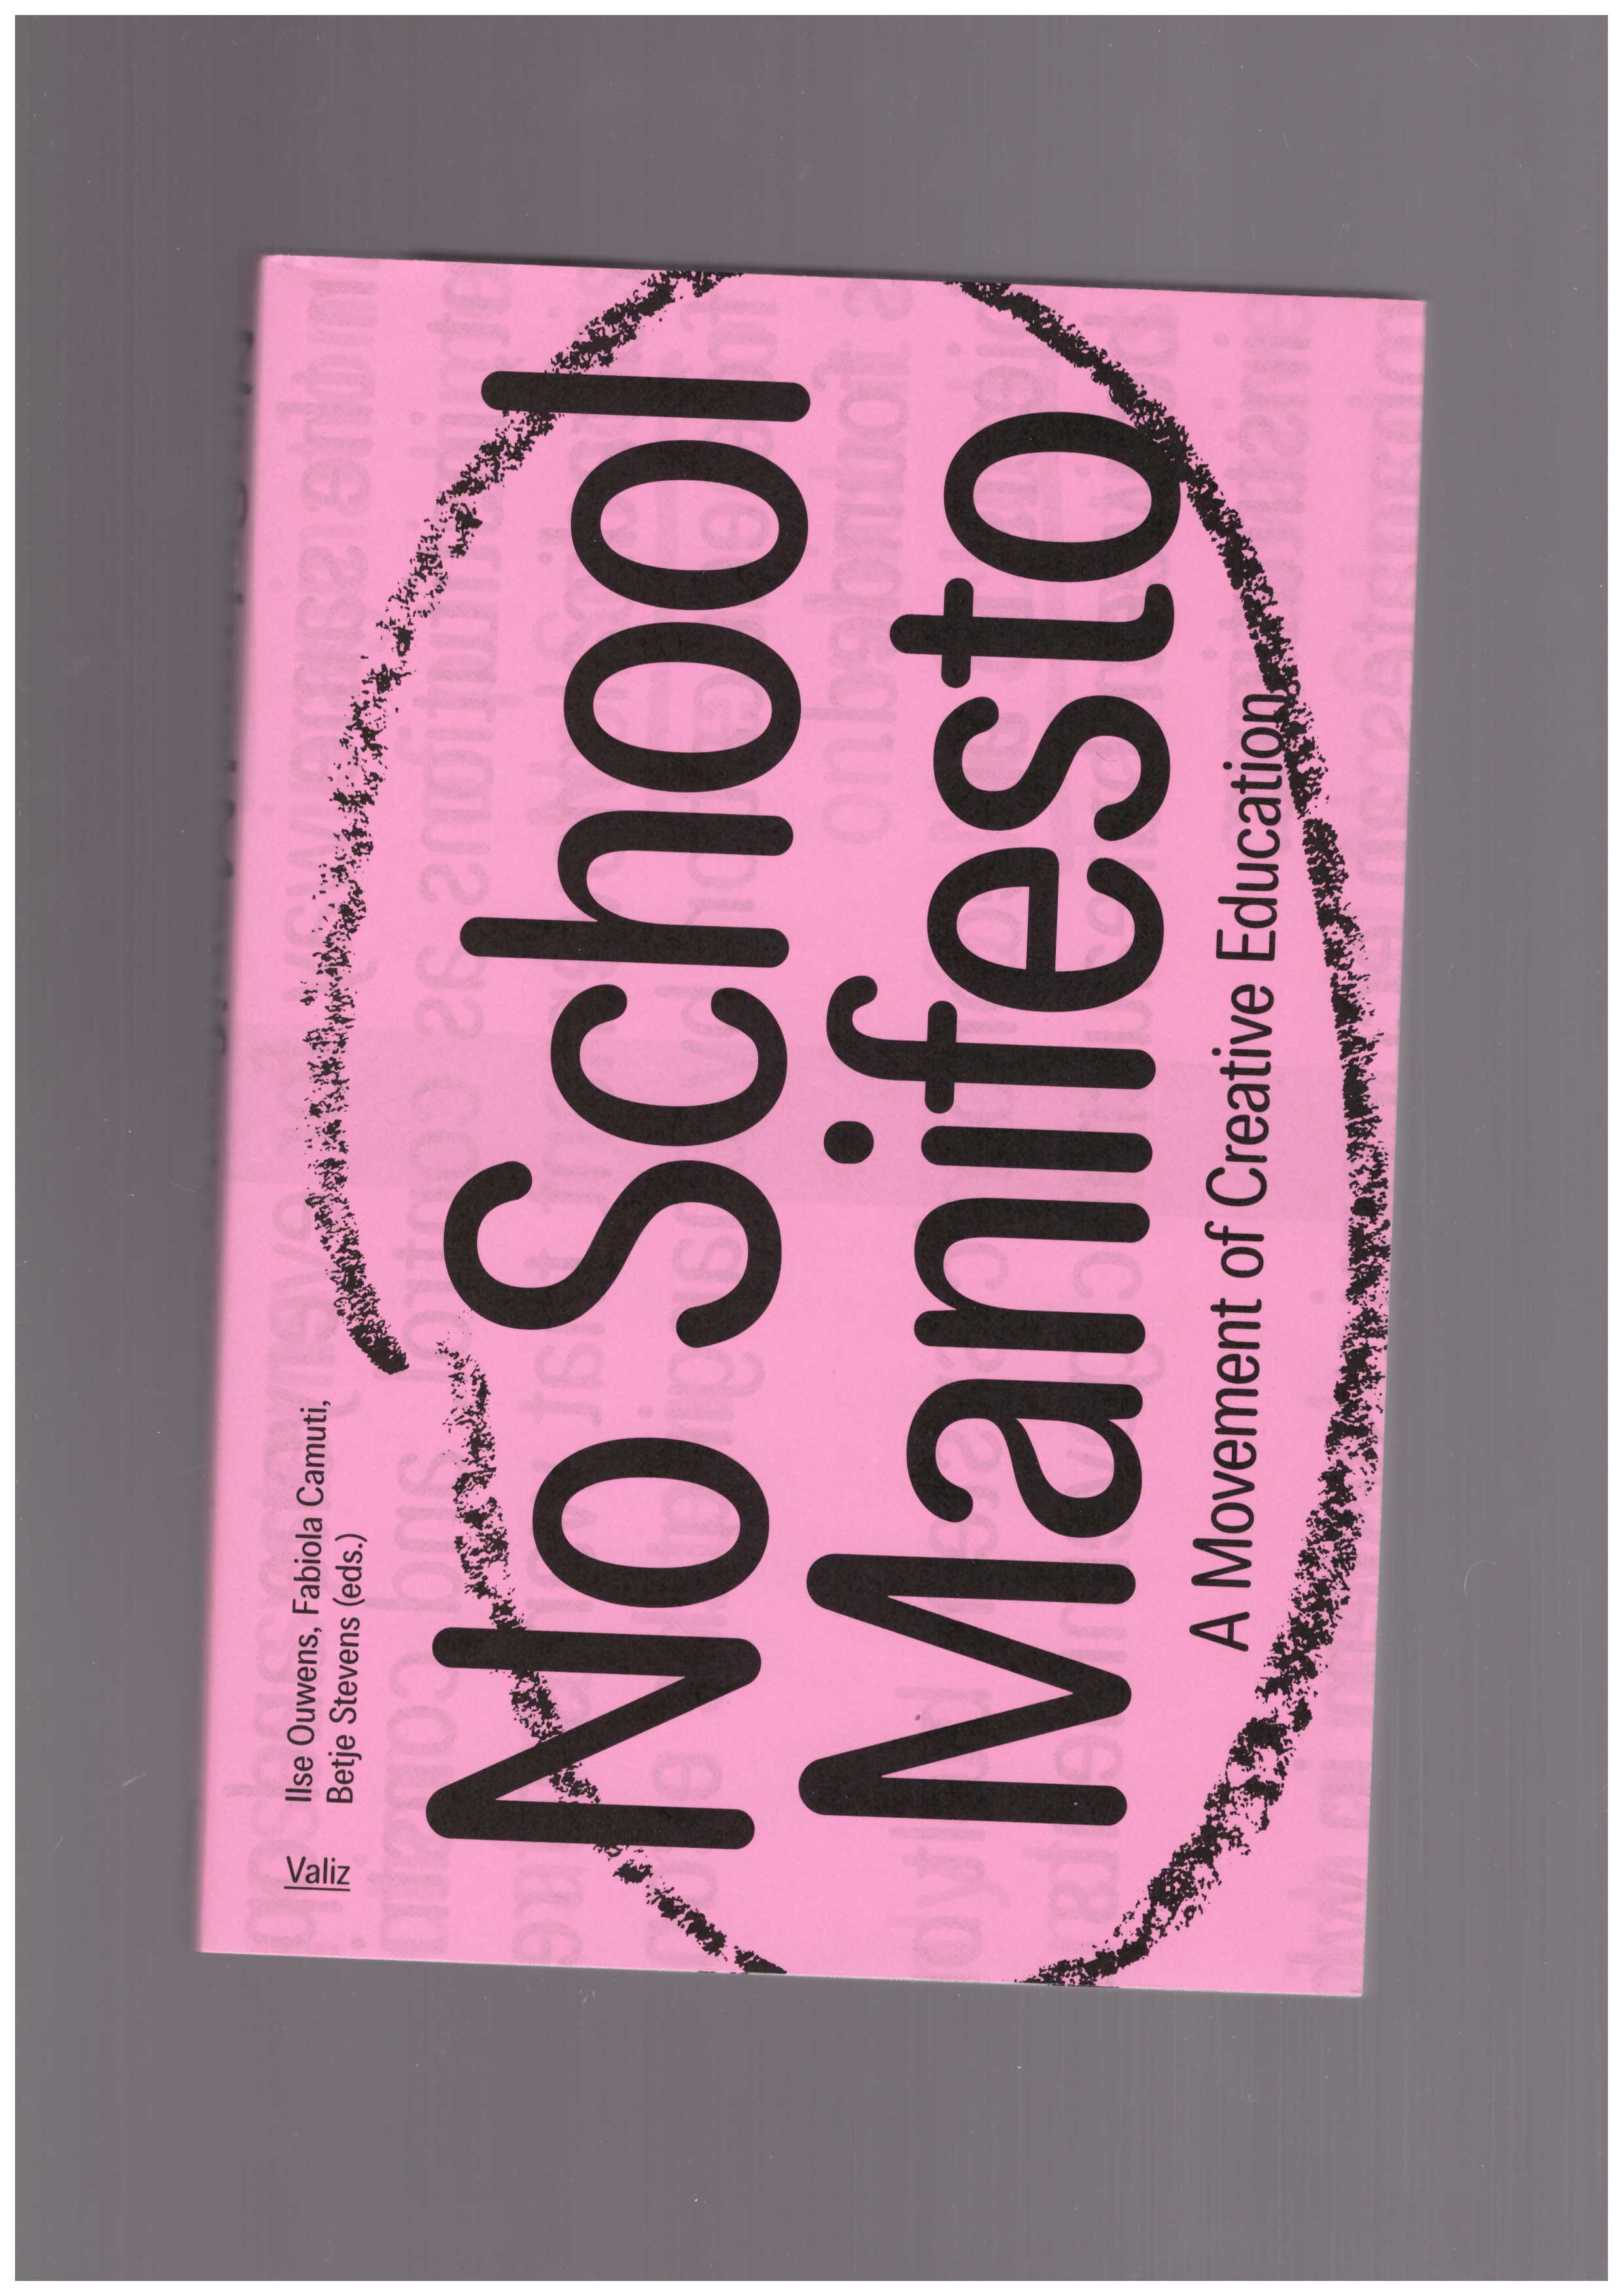 OUWENS; CAMUTI; STEVENS (eds) - No School Manifesto - A Movement Of Creative Education